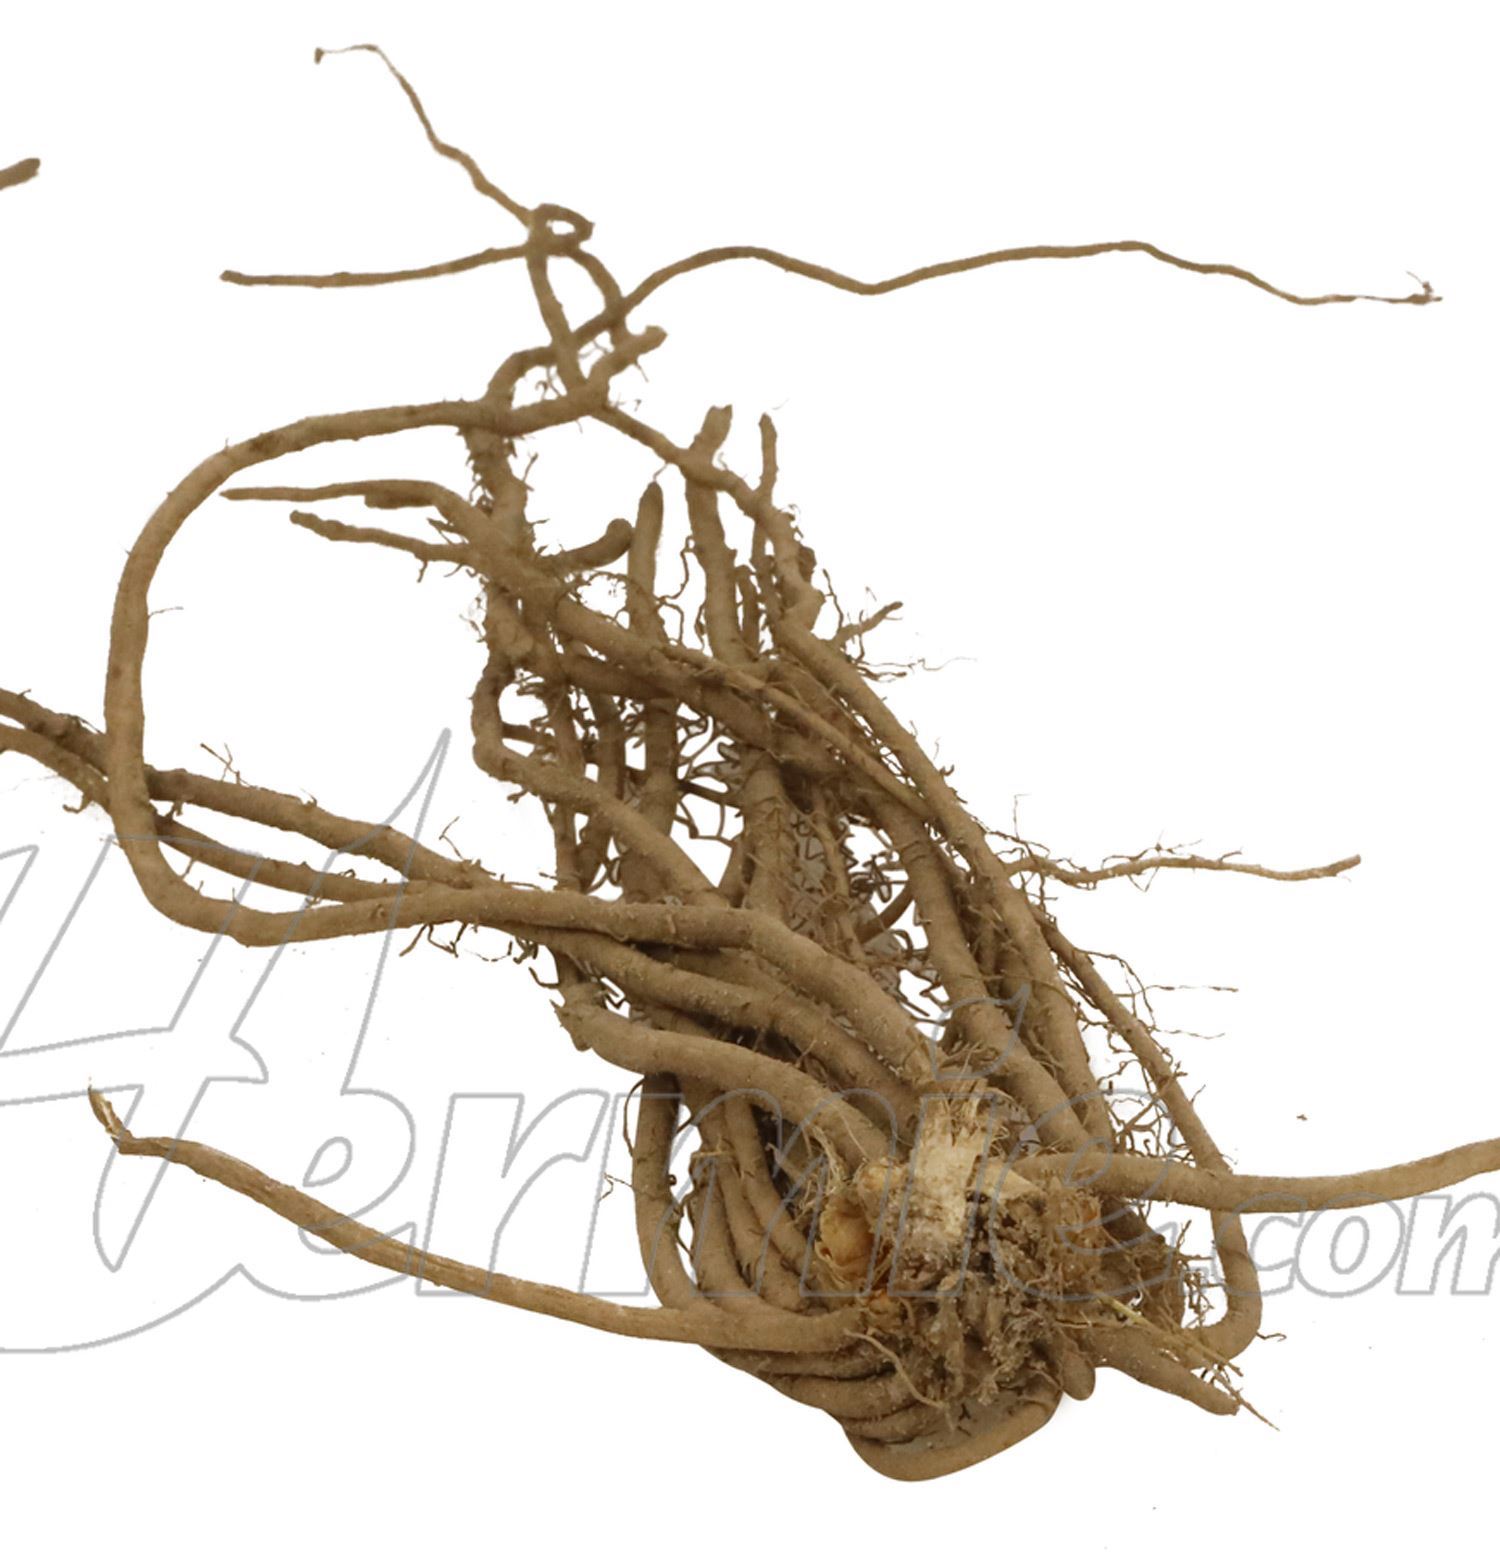 Asparagus roots biennial 'Argenteuil' (ideal for white asparagus) - set of 10 plants